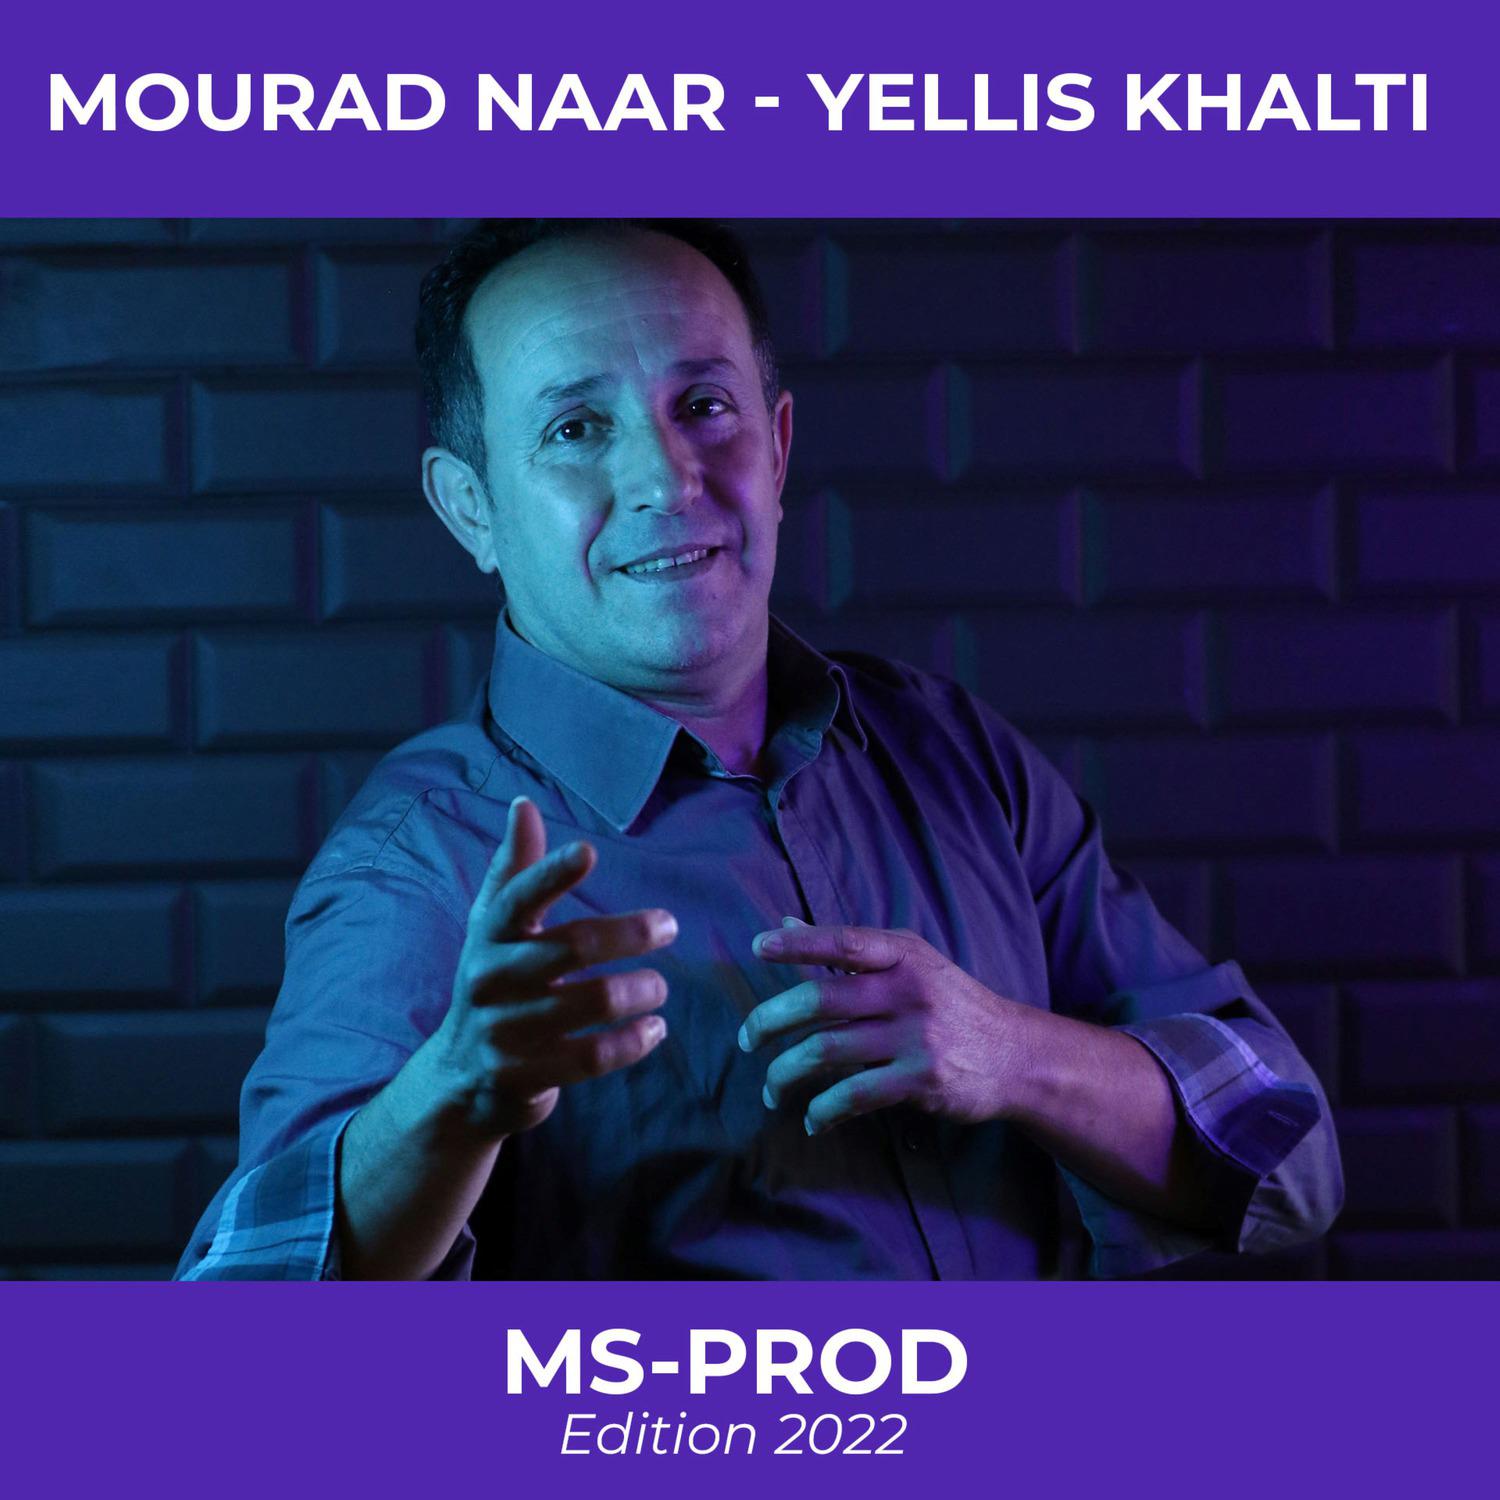 Mourad Naar - Yellis Khalti